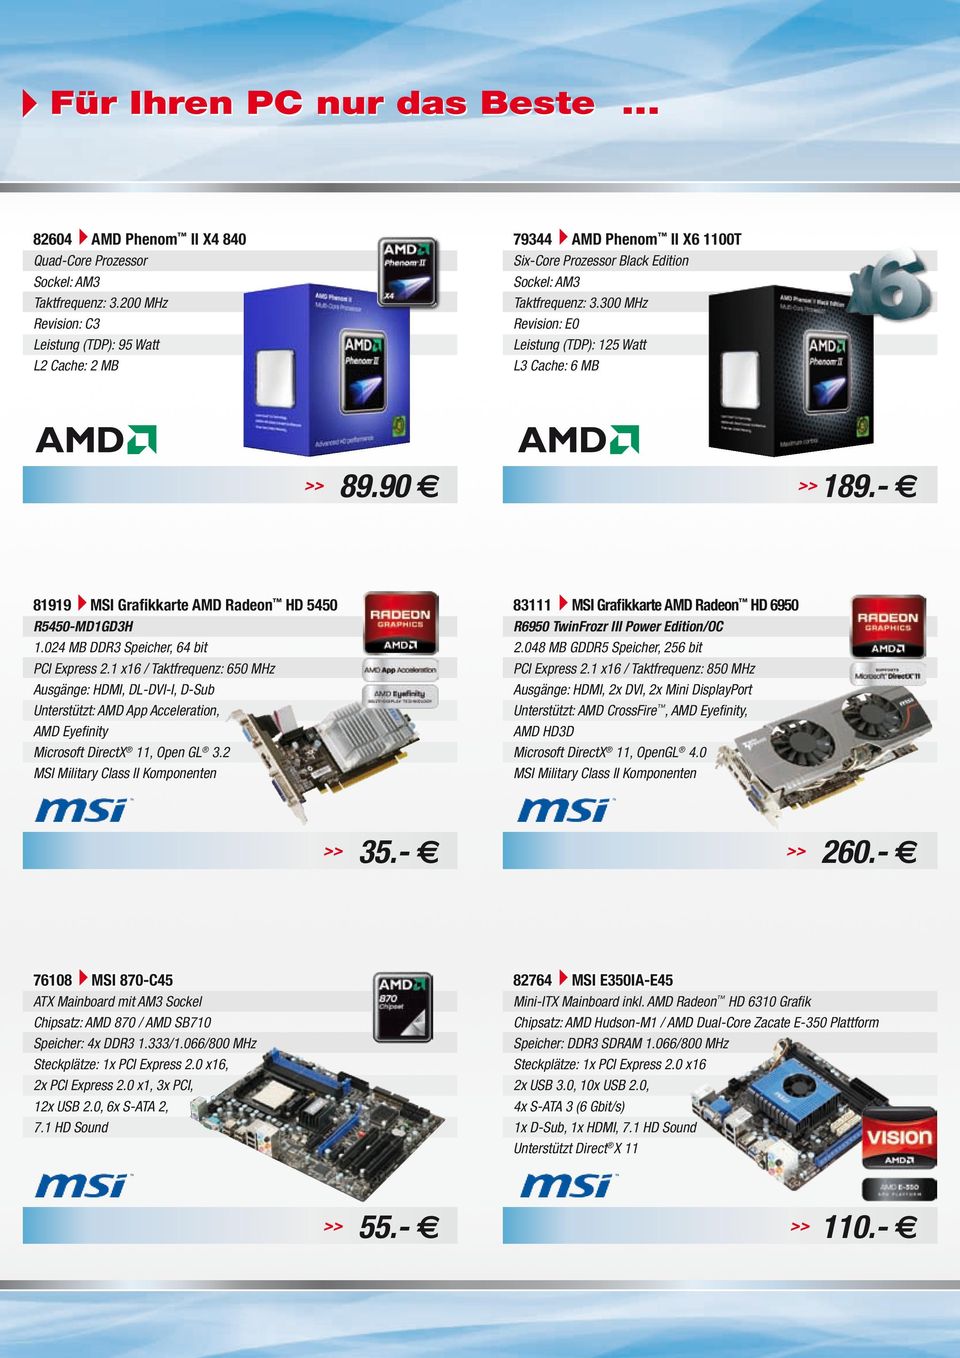 90 e MSI Grafikkarte AMD Radeon HD 5450 83111 R5450-MD1GD3H 1.024 MB DDR3 Speicher, 64 bit PCI Express 2.